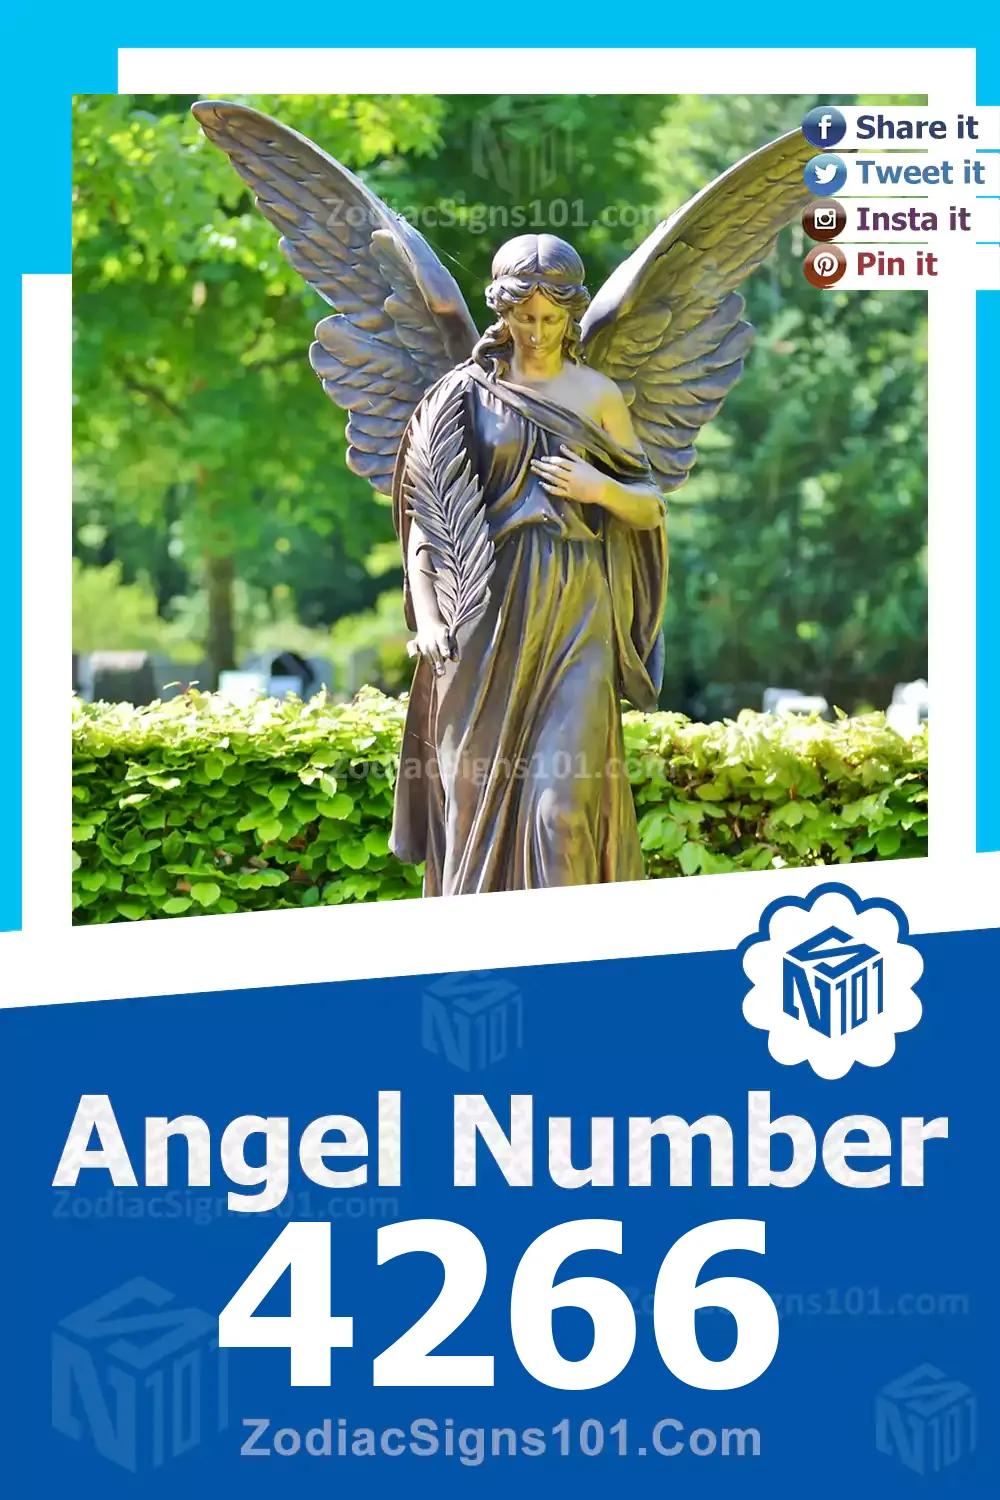 4266-Angel-Number-Meaning.jpg